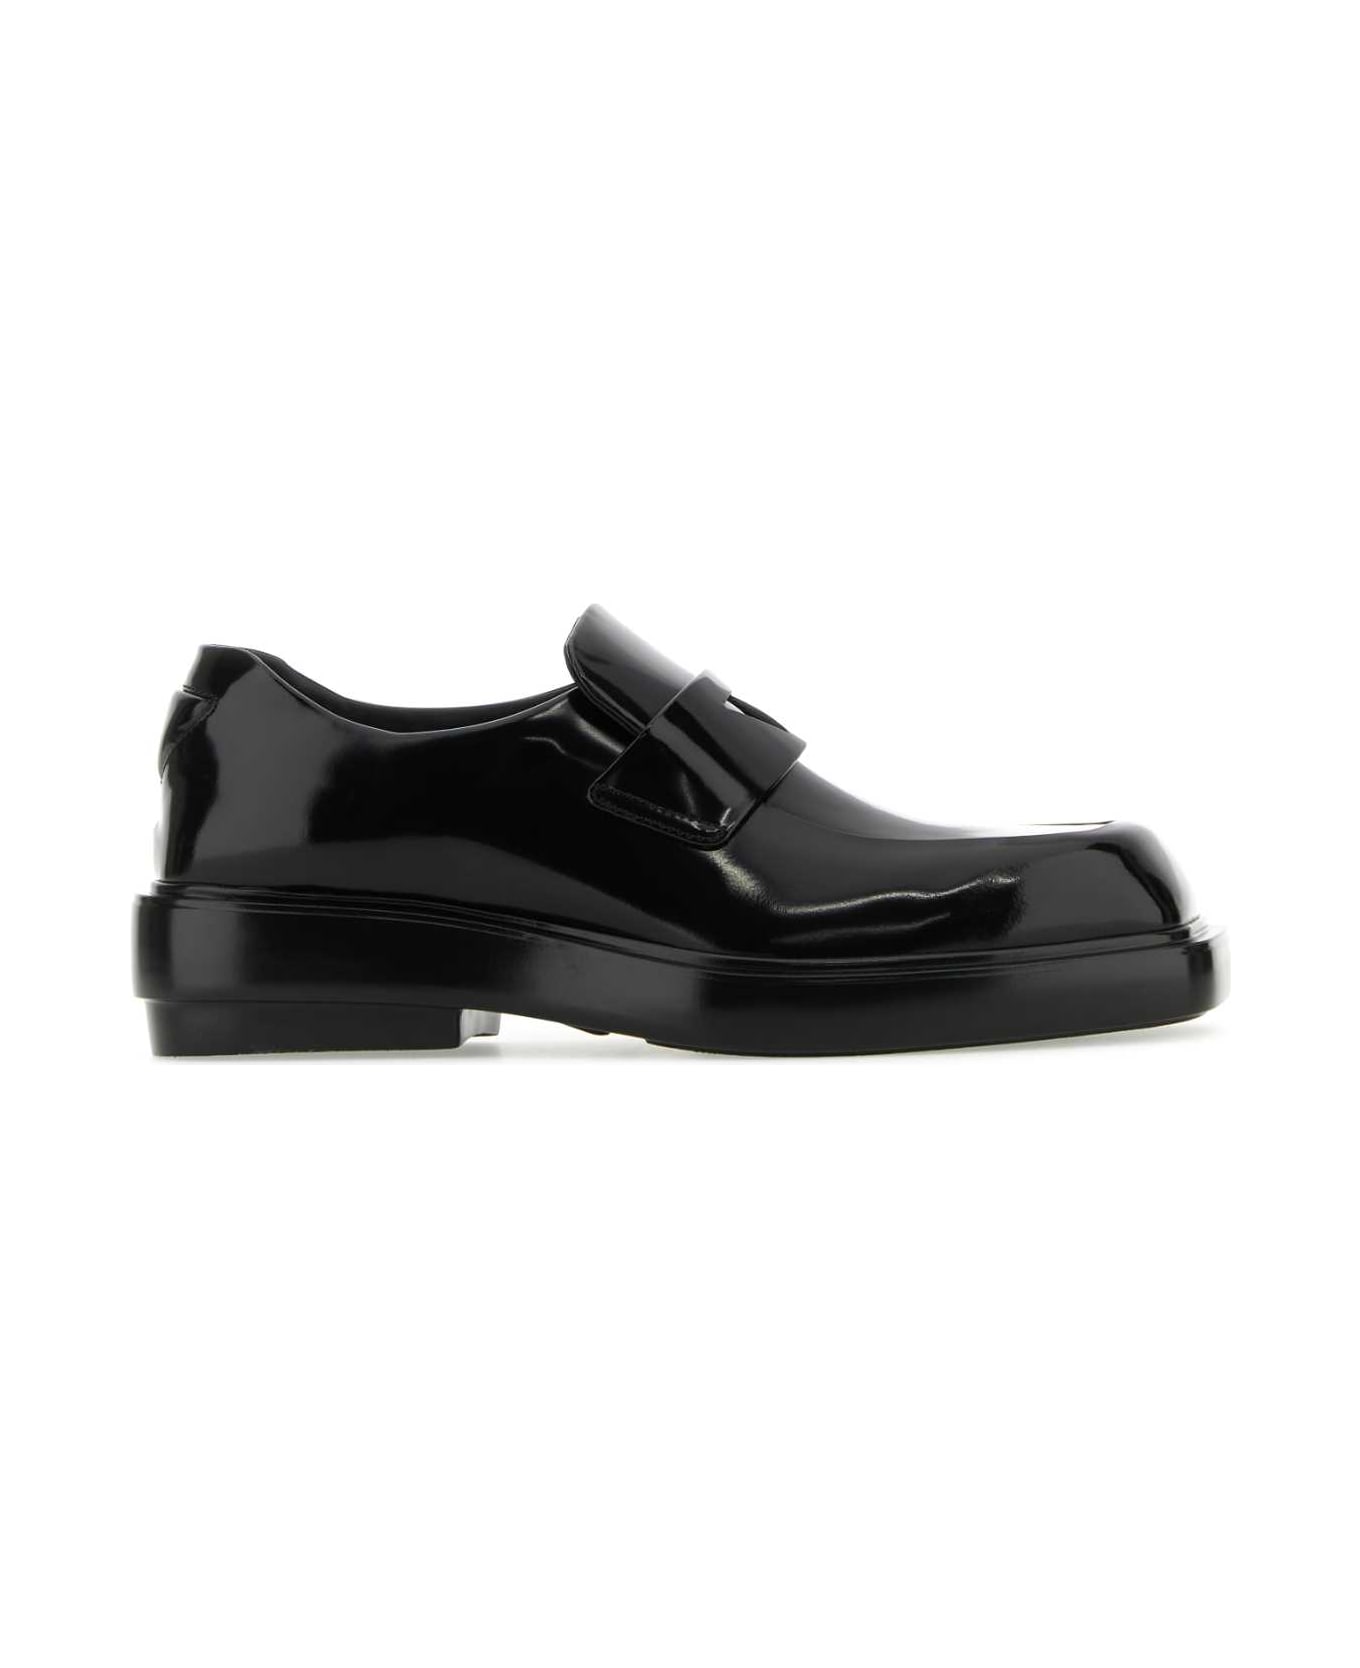 Prada Black Leather Loafers - NERO